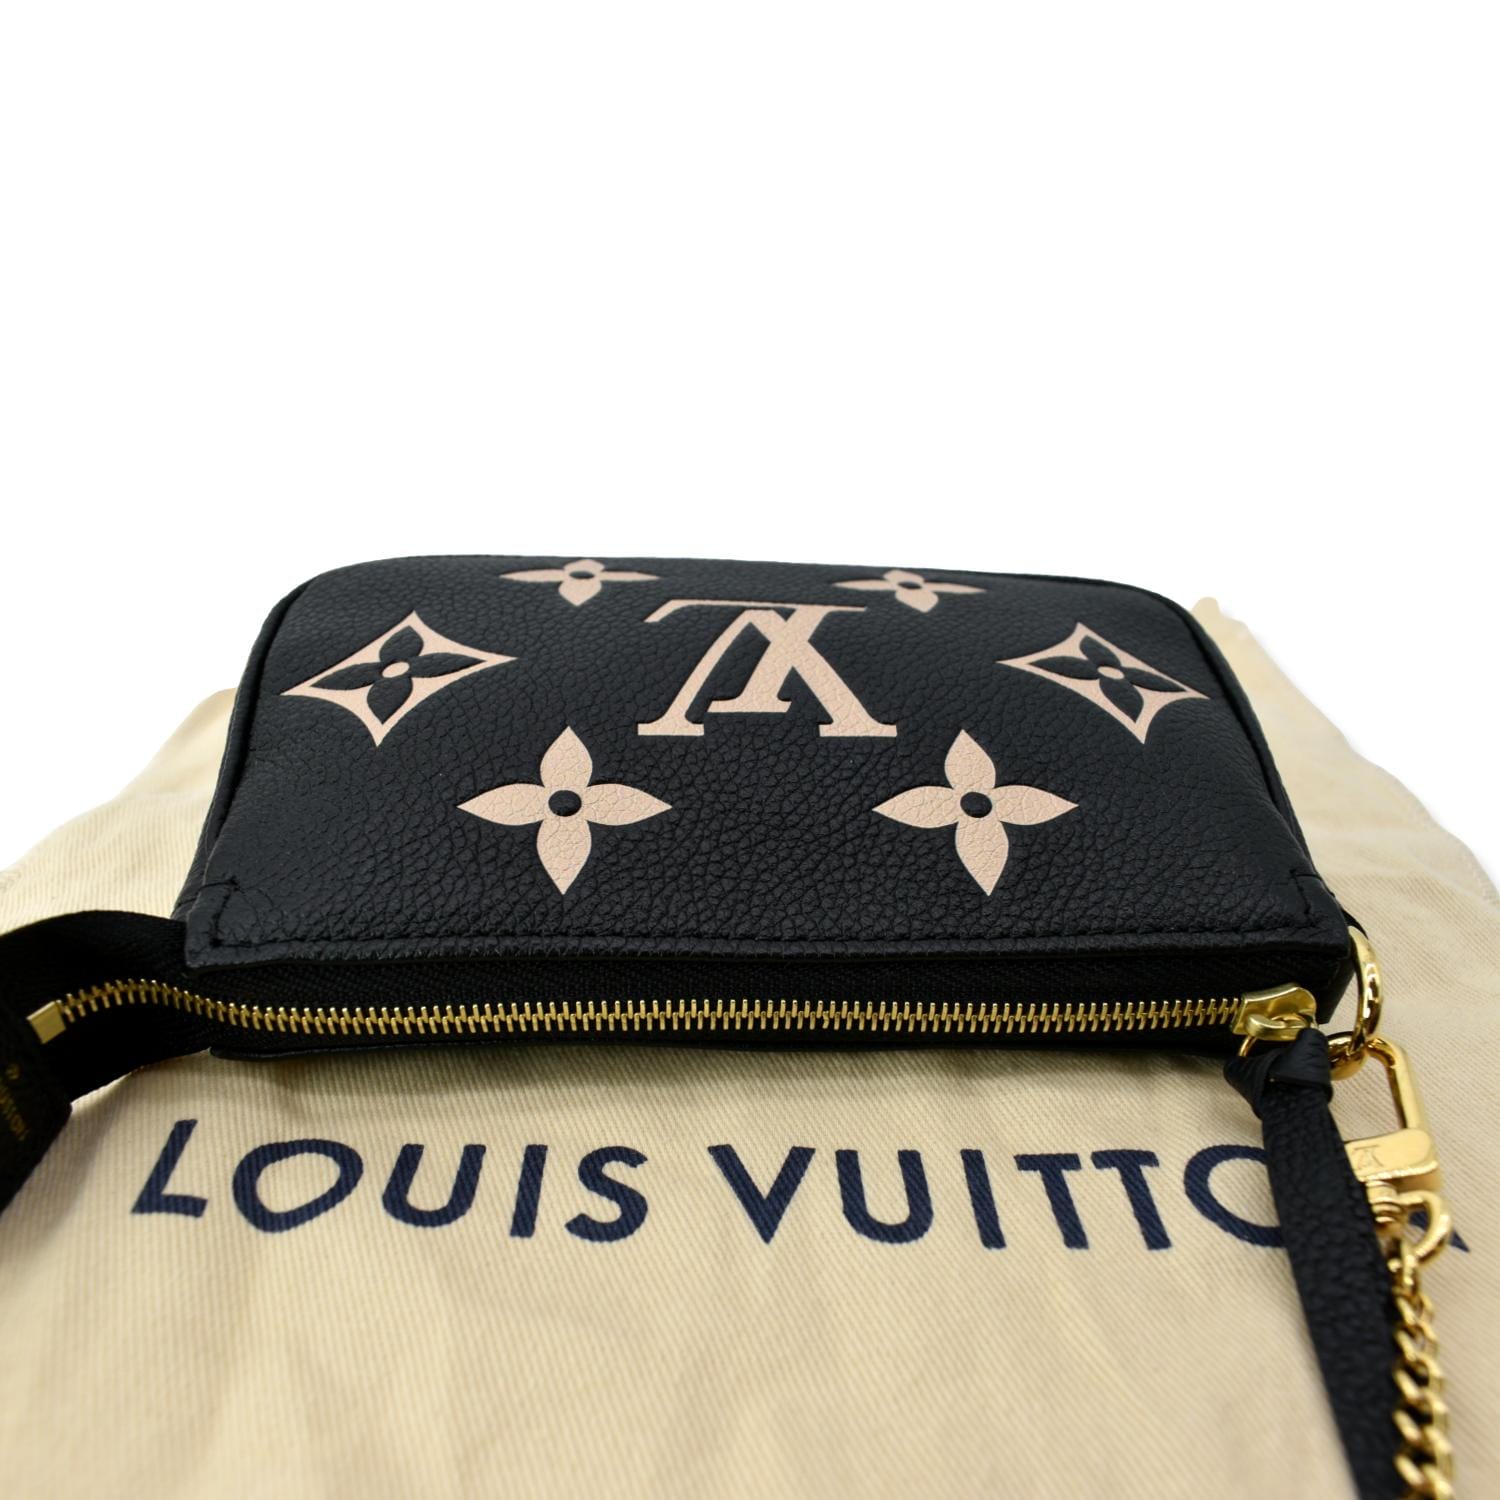 NEW Louis Vuitton Mini Pochette Accessoires in Monogram